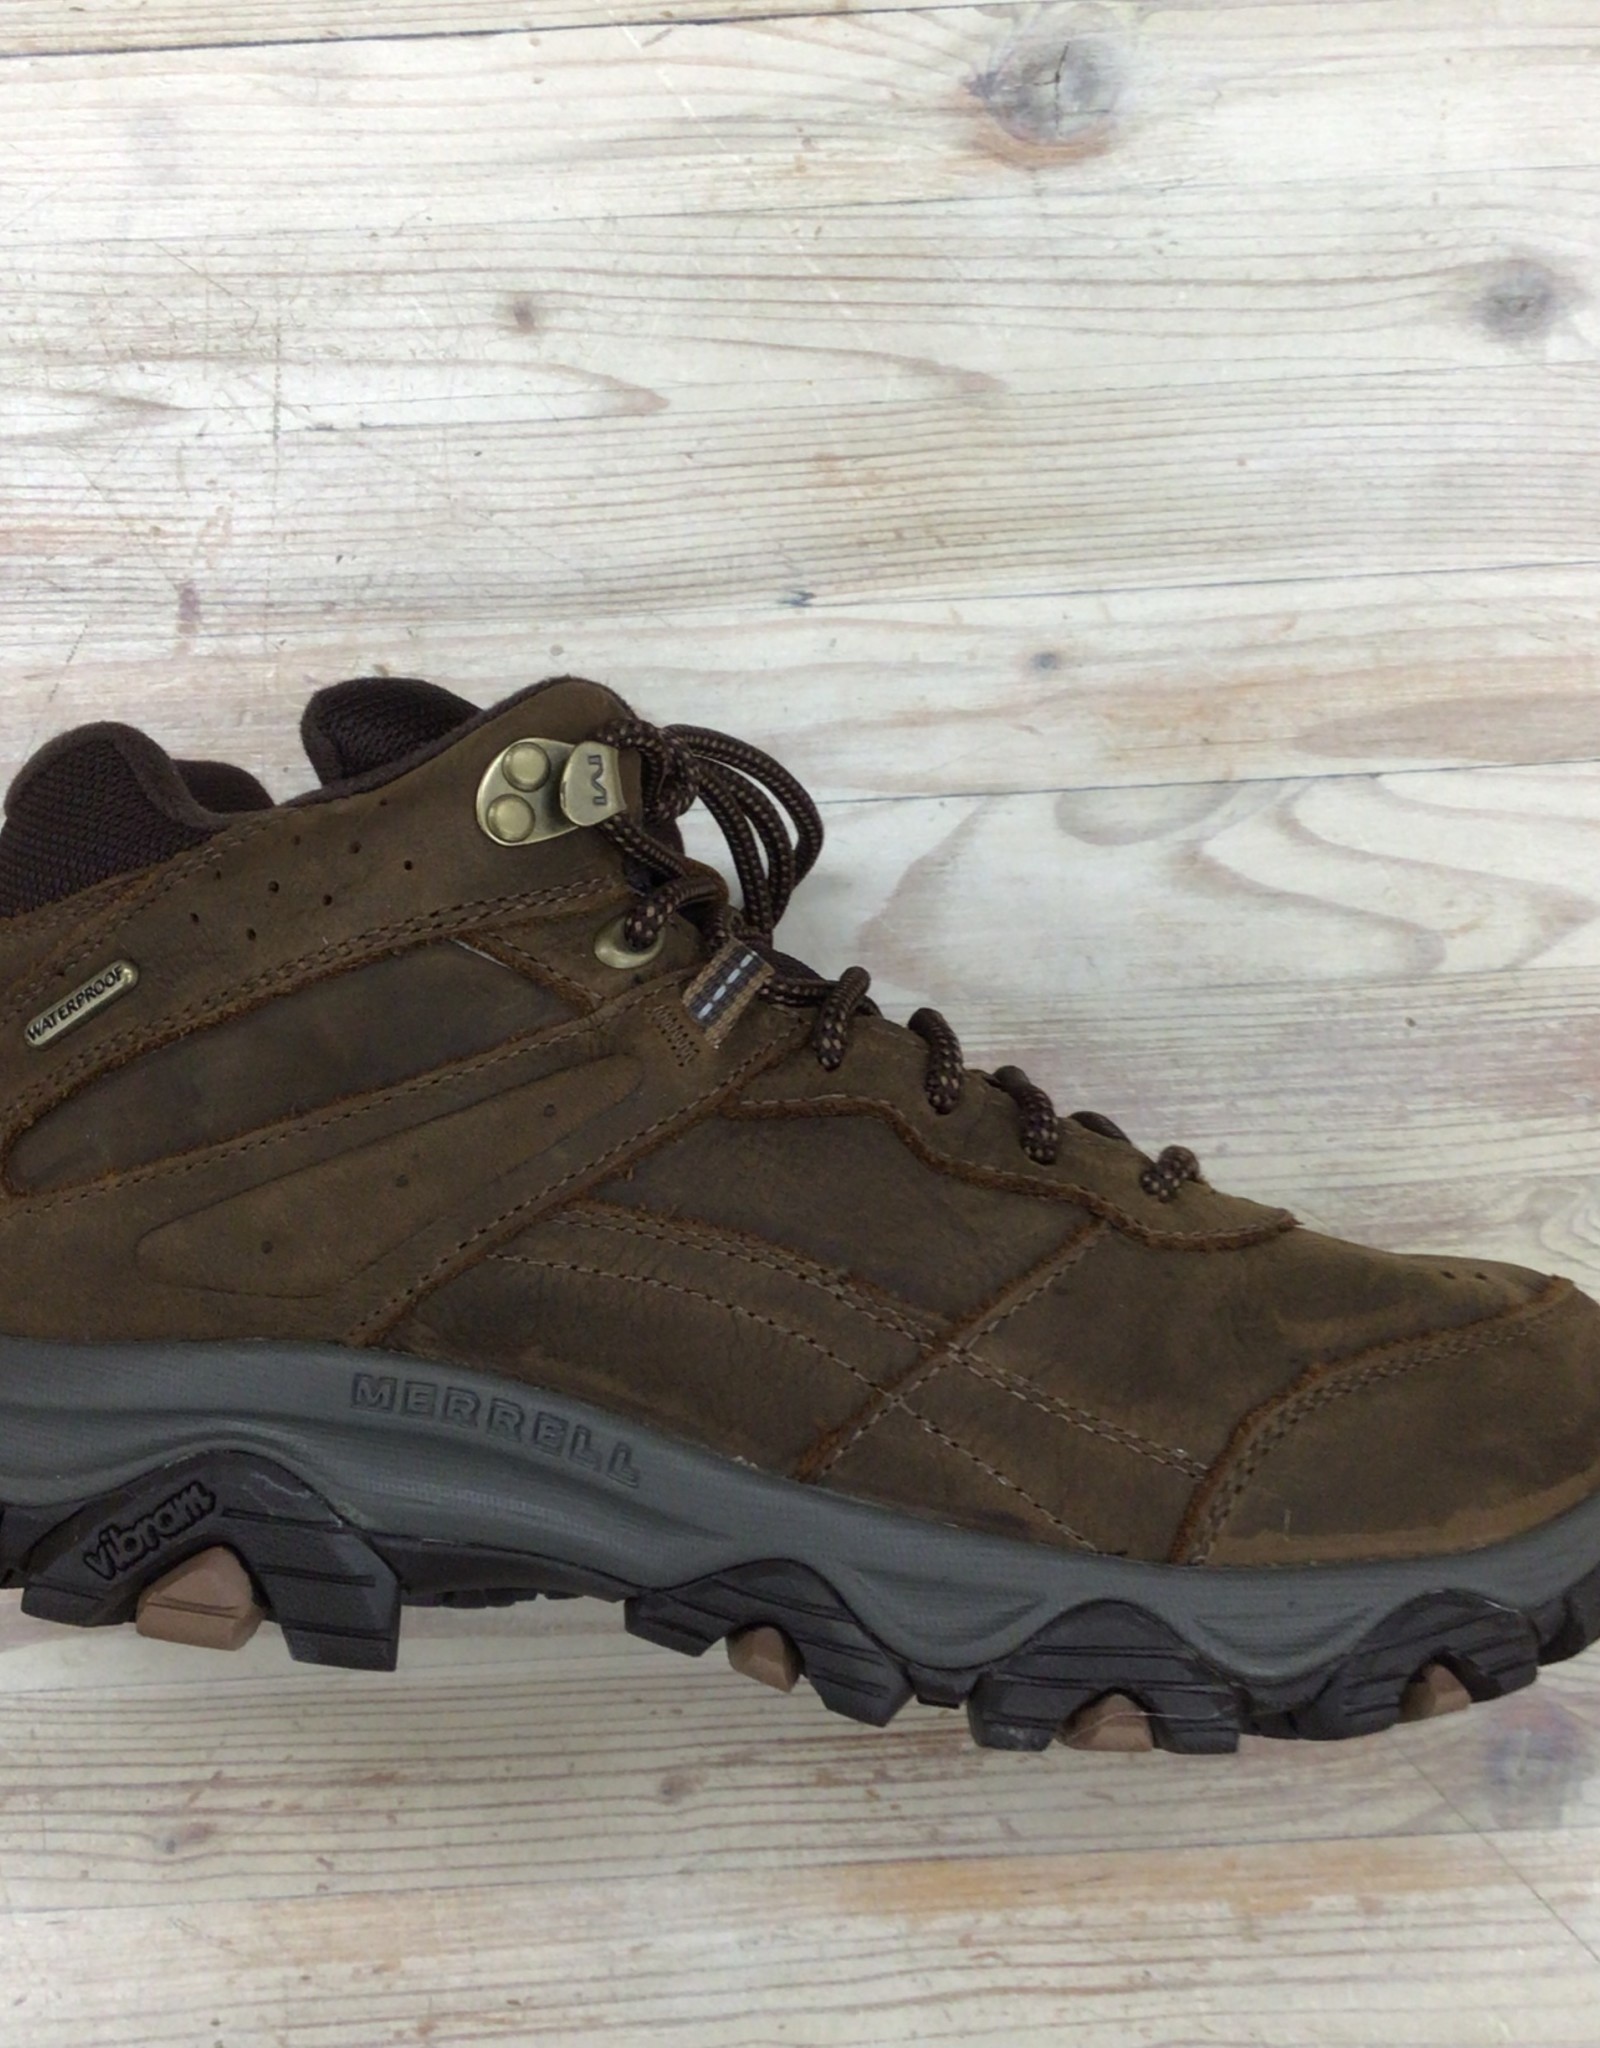 Merrell Men's Moab Adventure 3 Shoes, Waterproof, Leather